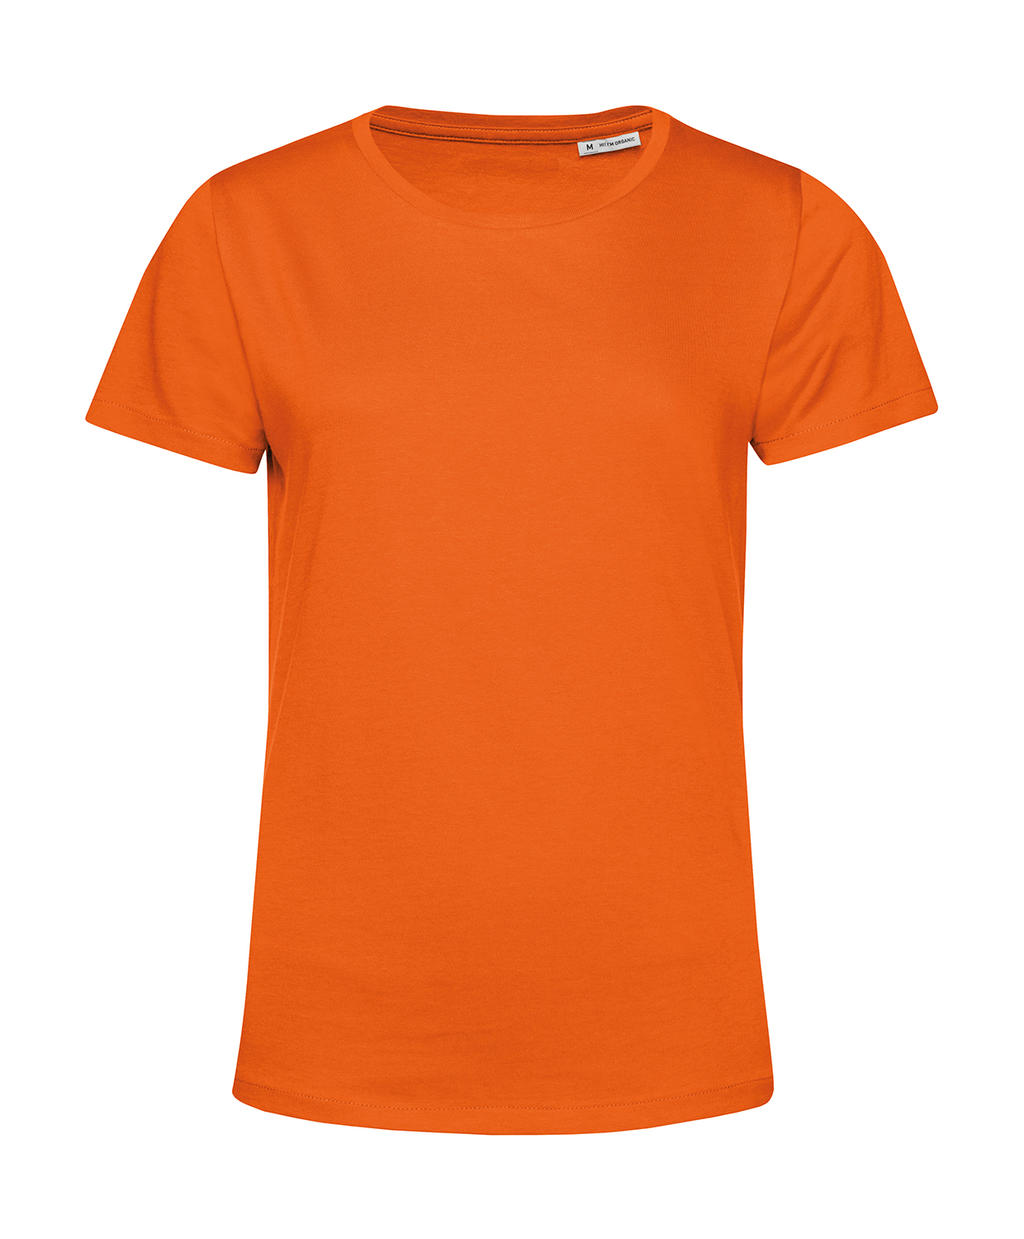 Tričko dámské BC Organic Inspire E150 - oranžové, XS